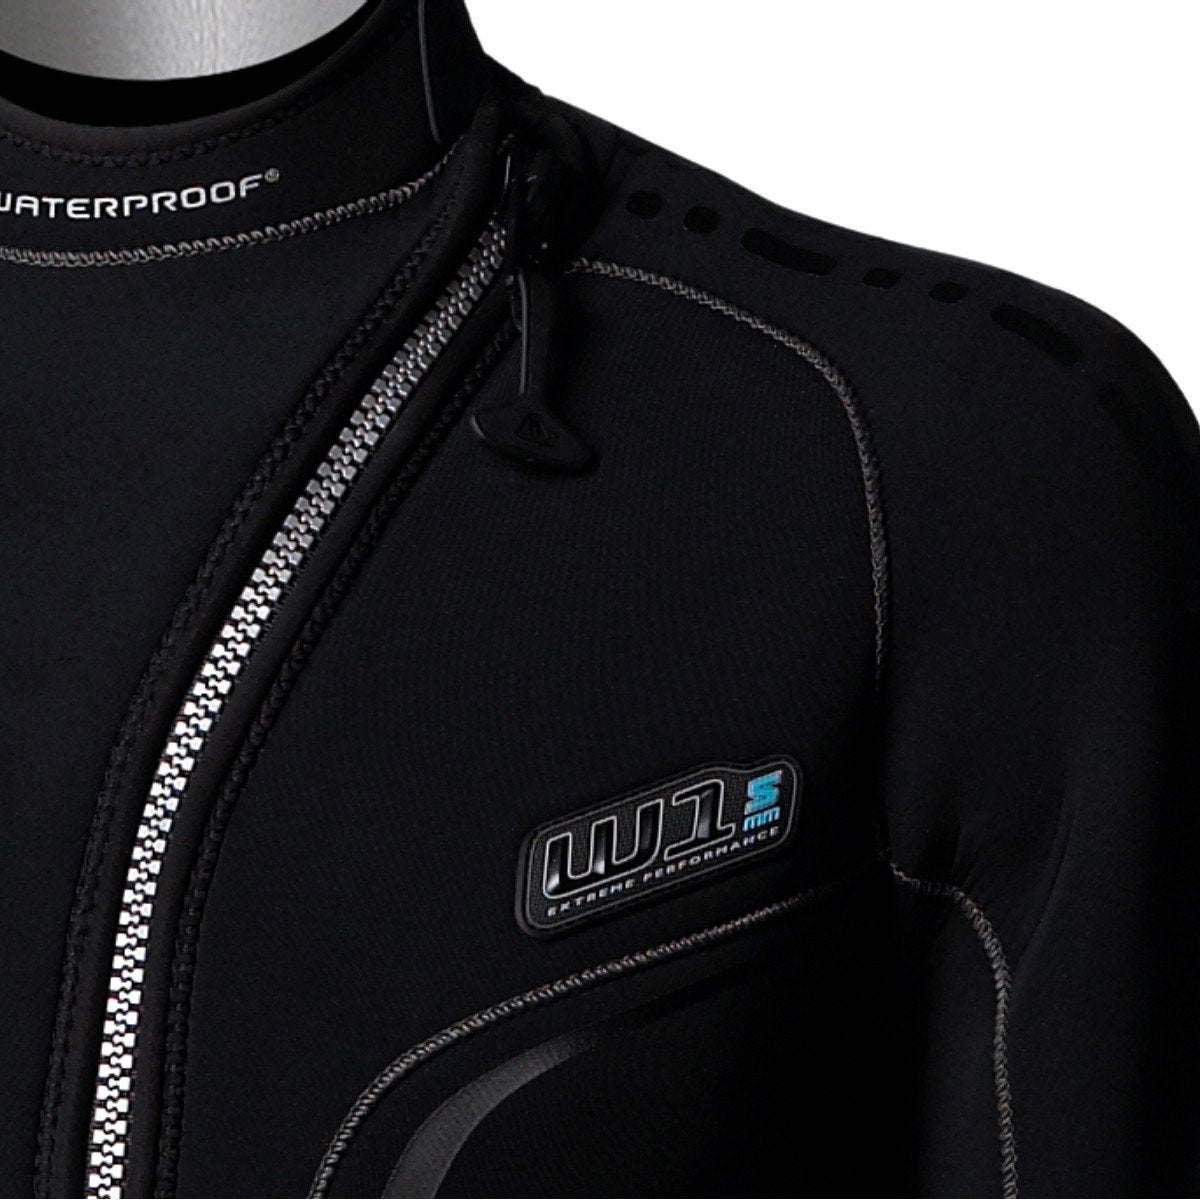 Waterproof SALE Waterproof W1 5mm Wetsuit Mens by Oyster Diving Shop